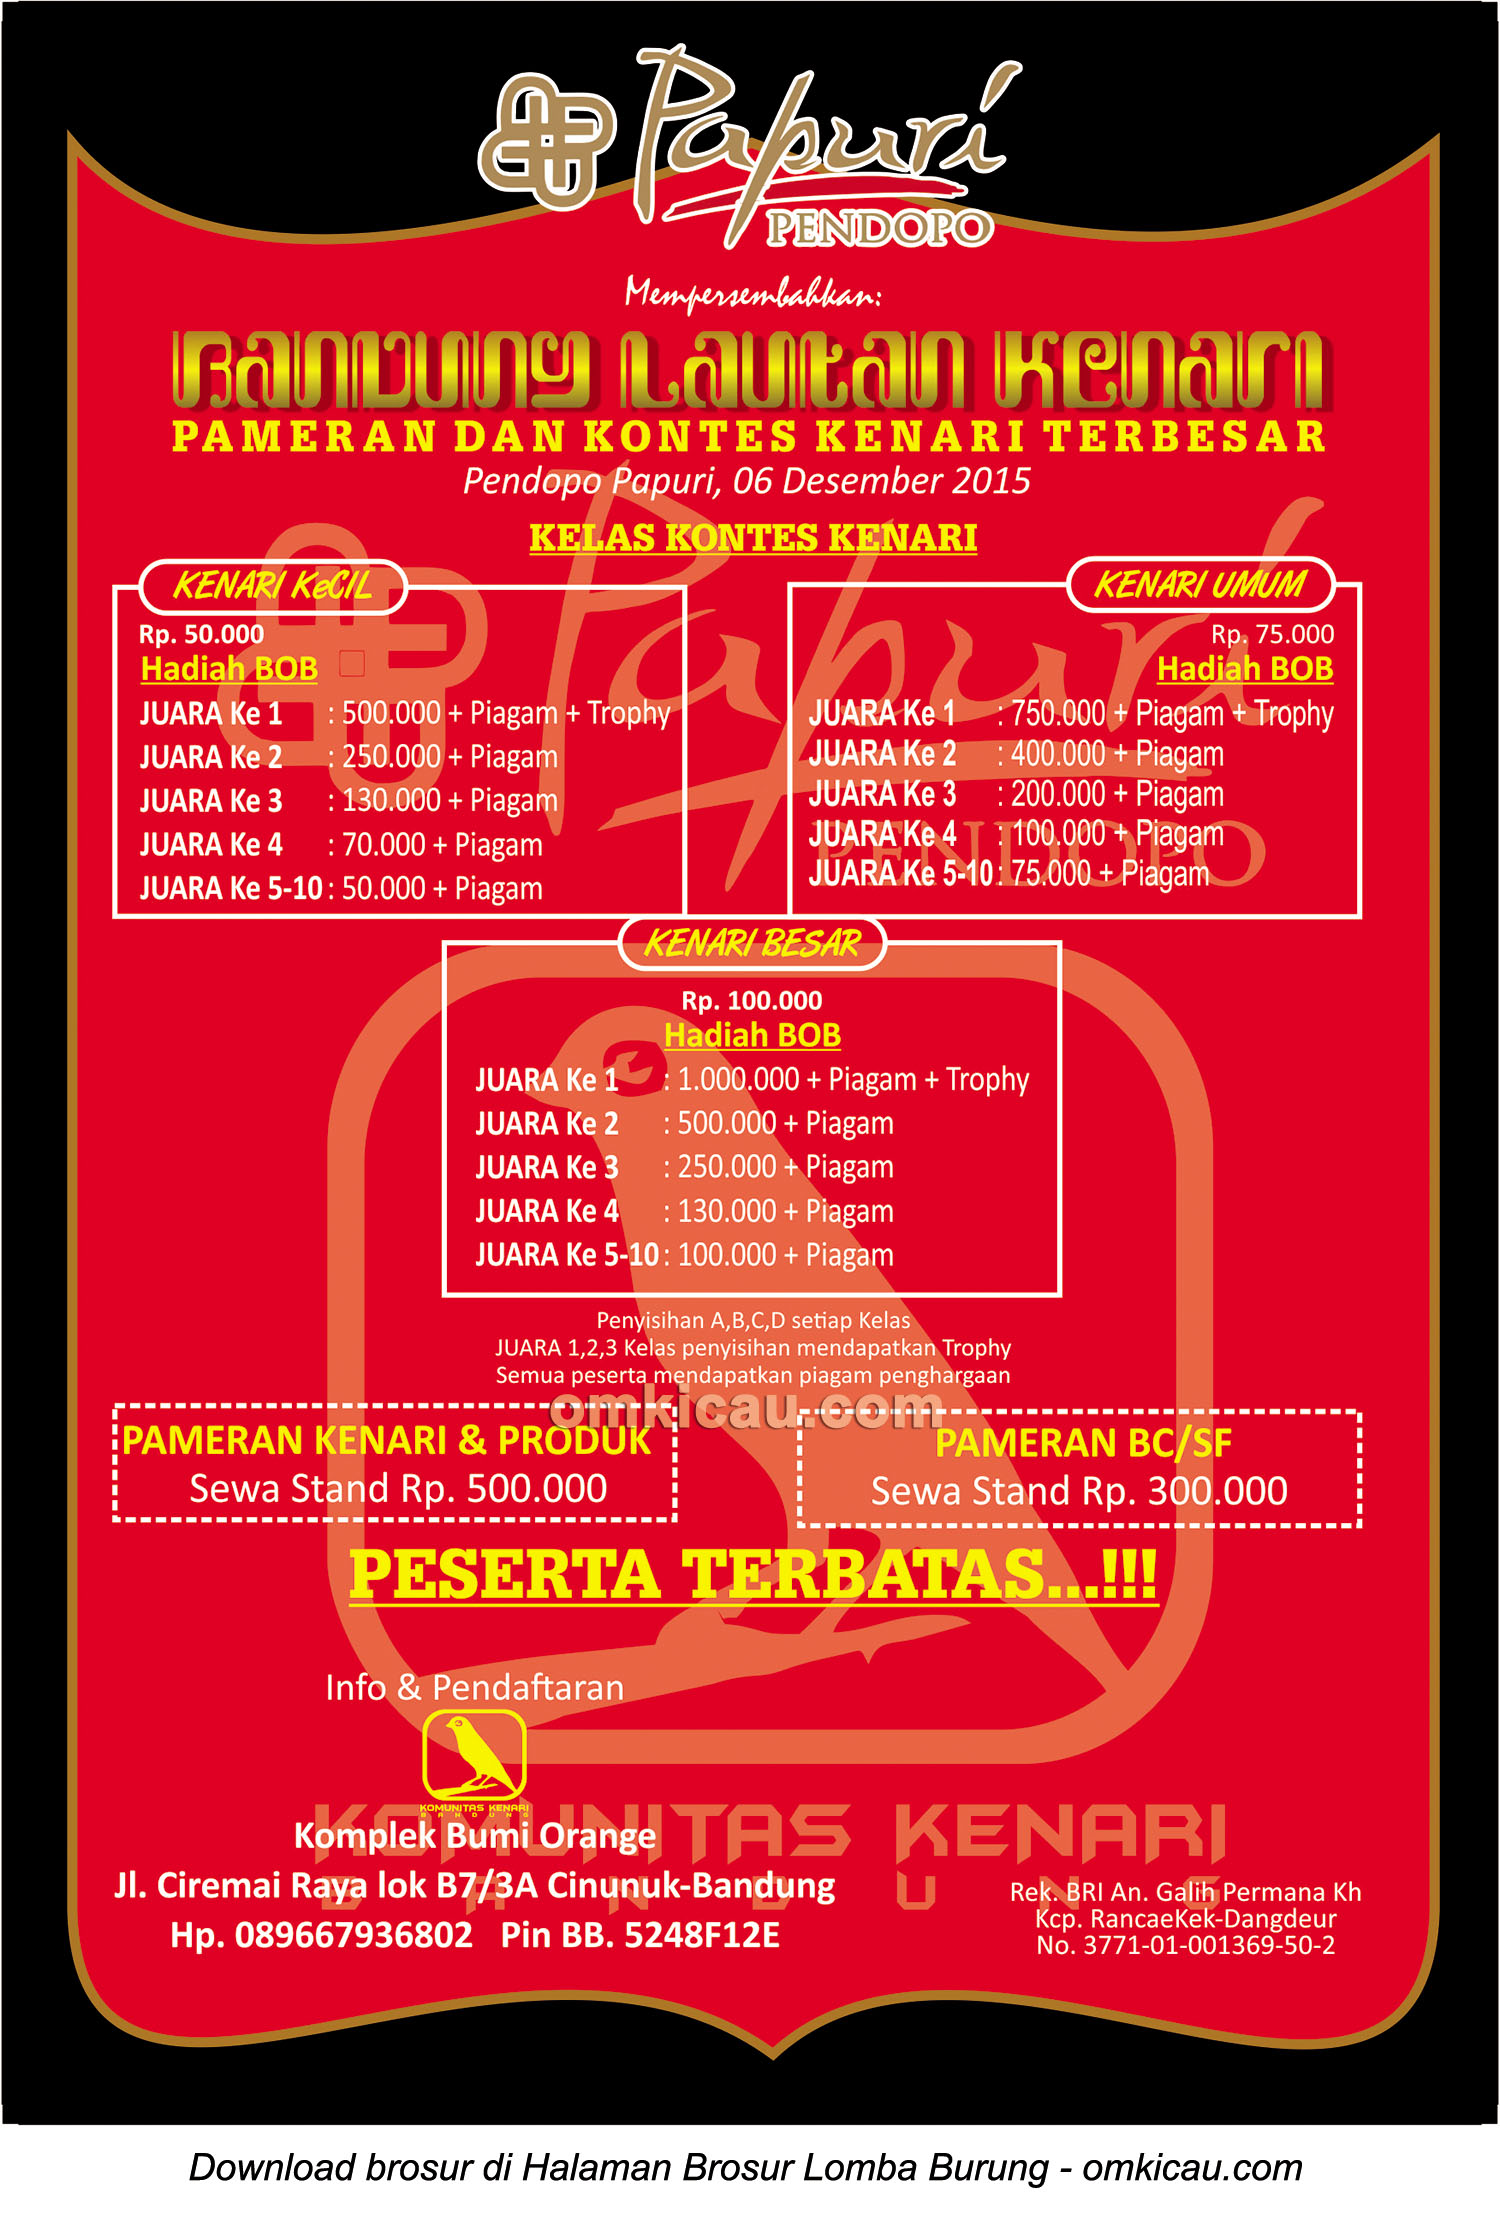 Brosur Kontes Kenari KKB - Bandung Lautan Kenari, Bandung, 6 Desember 2015